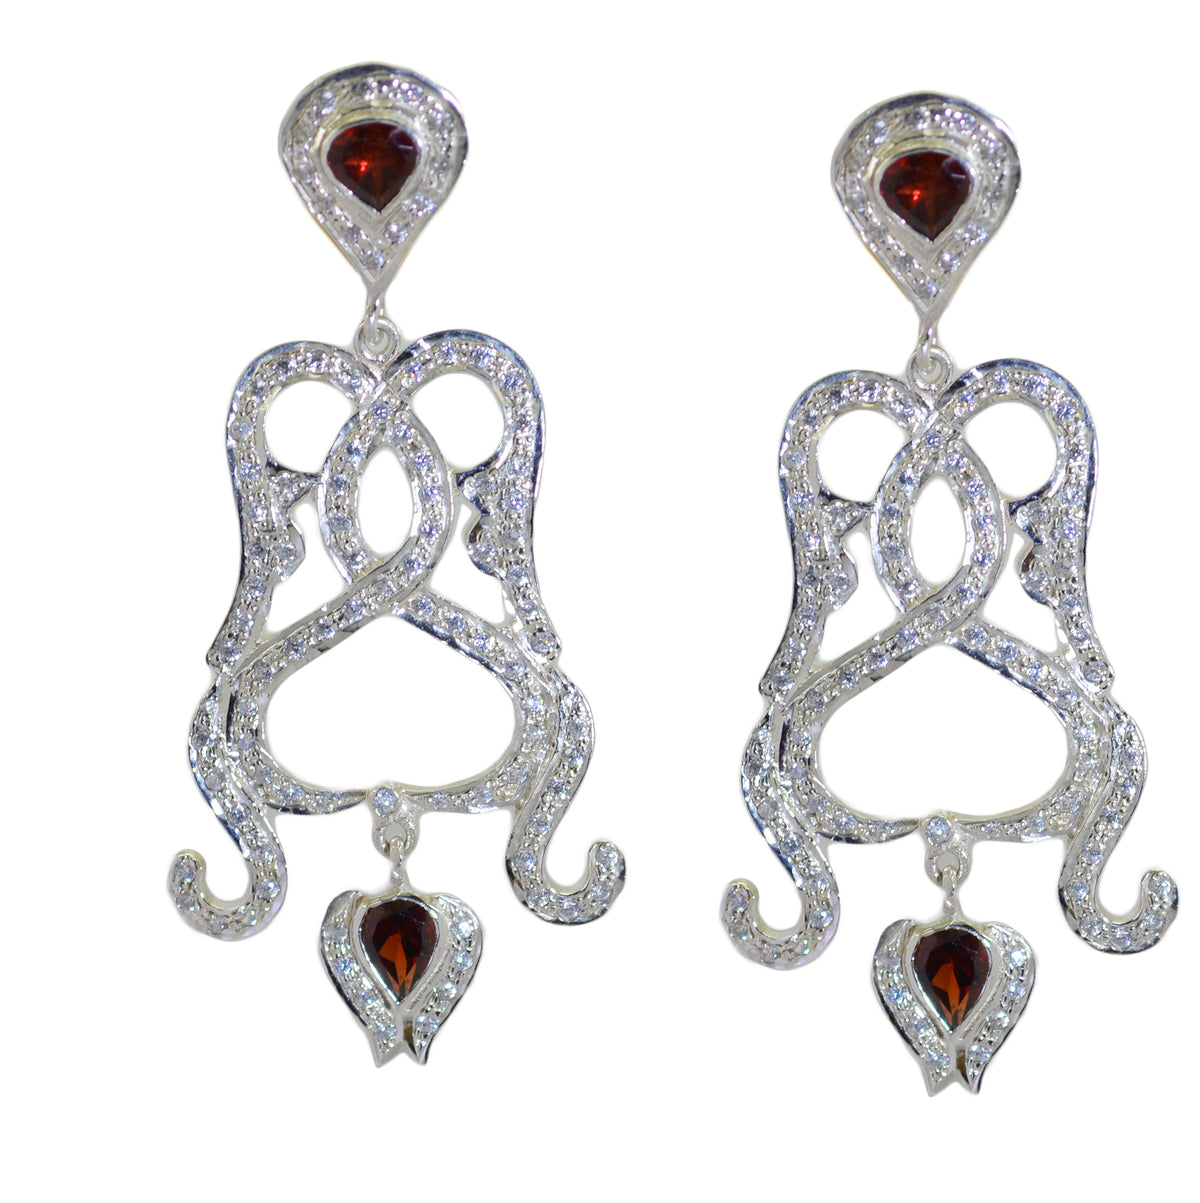 Riyo Genuine Gems pear Faceted Red Garnet Silver Earrings gift for christmas